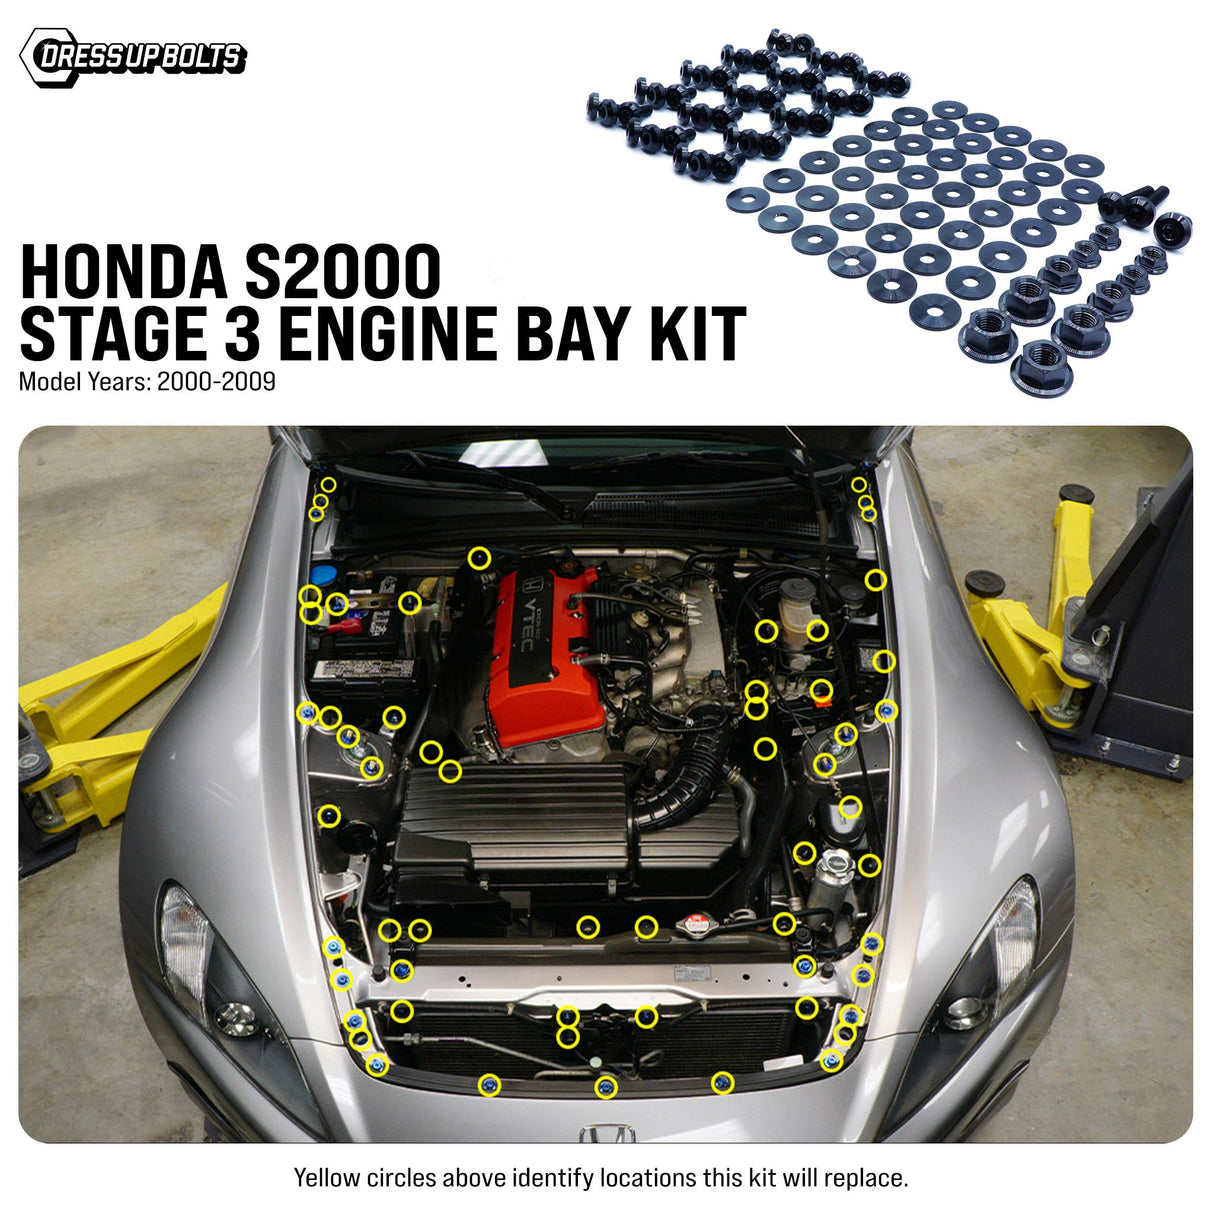 Dress Up Bolts Stage 3 Titanium Hardware Engine Bay Kit - Honda S2000 (2000-2009)